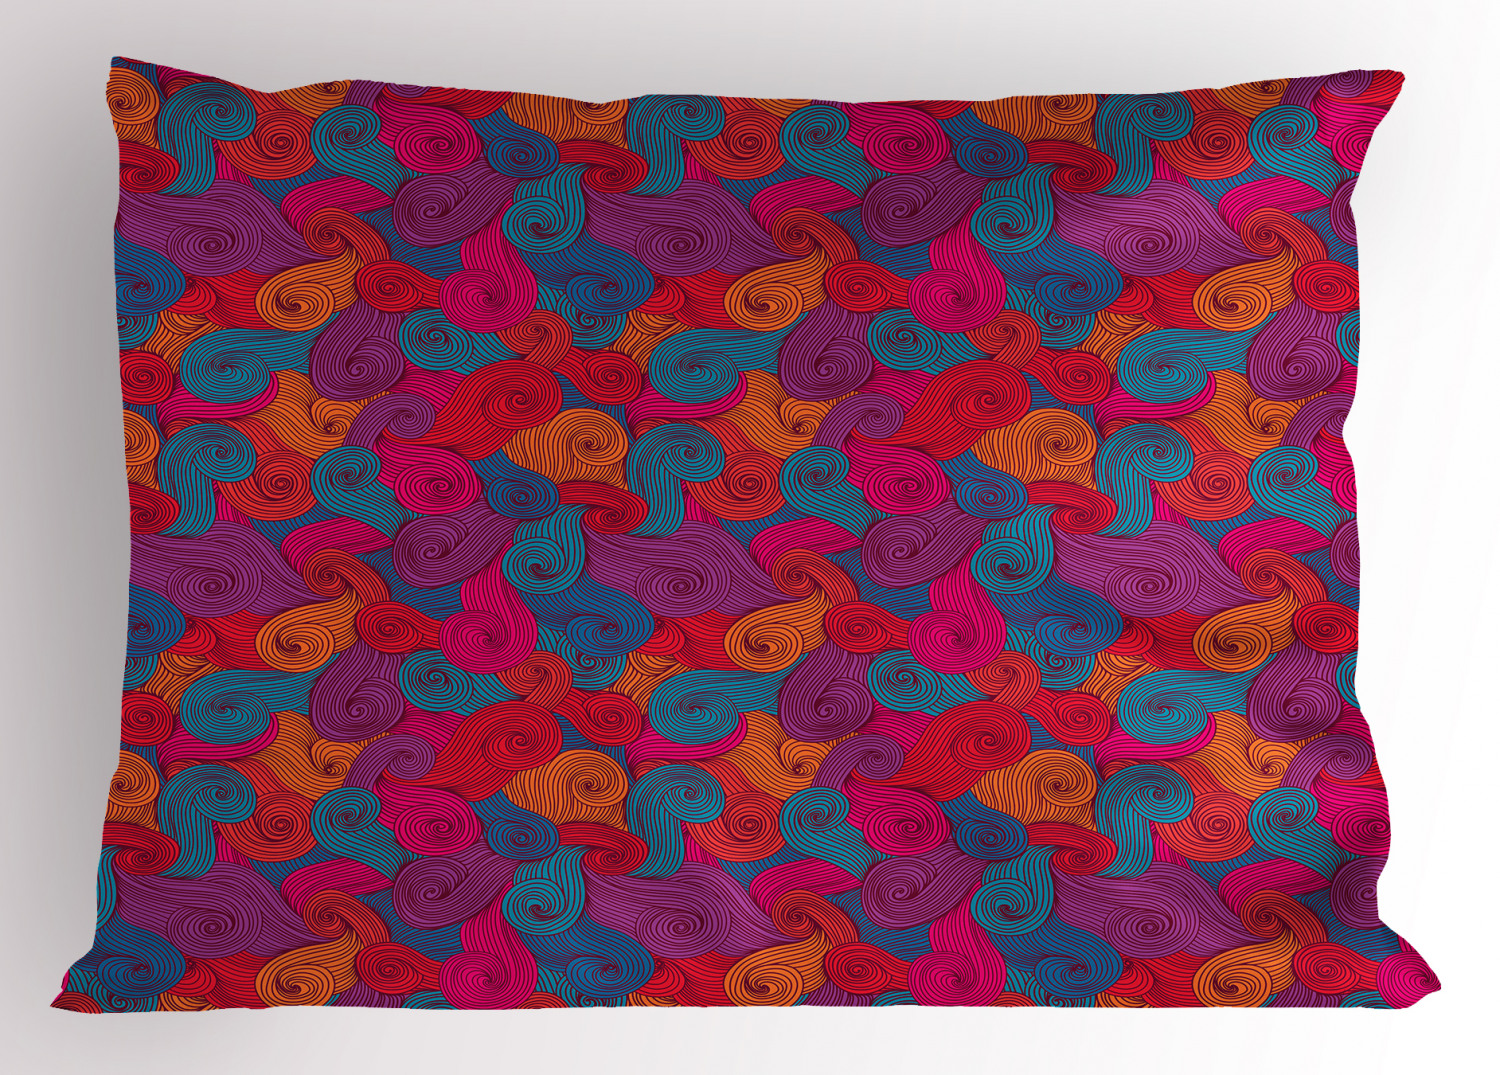 Details about   Colorful Modern Pillow Sham Decorative Pillowcase 3 Sizes Bedroom Decoration 